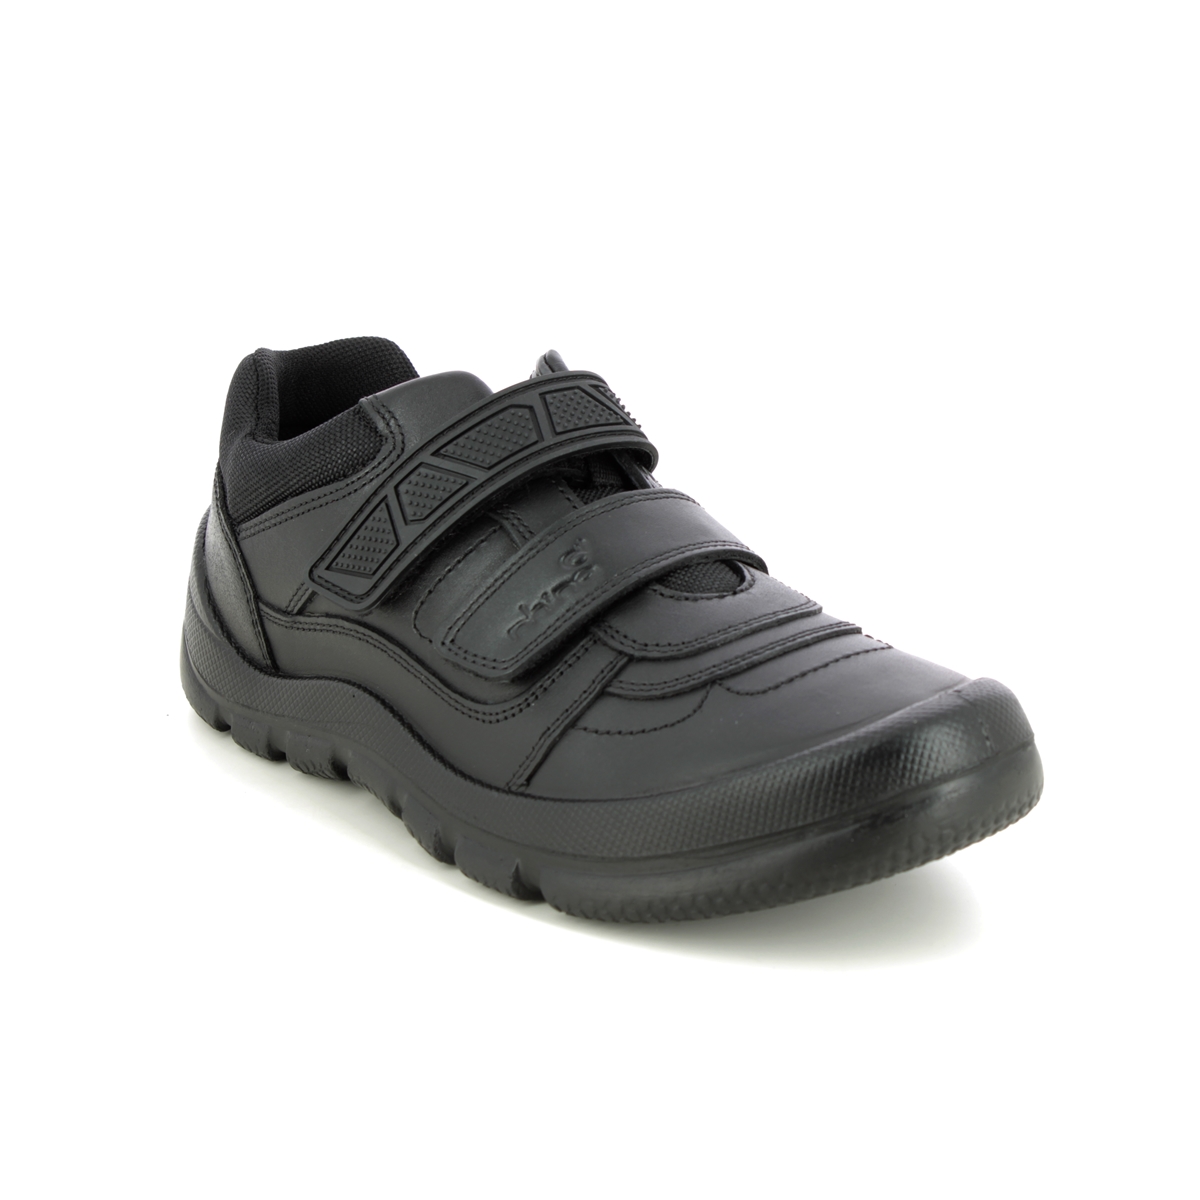 Start Rite - Rhino Warrior In Black Leather 8237-76F In Size 5.5 In Plain Black Leather For School Boys Shoes  In Black Leather For kids